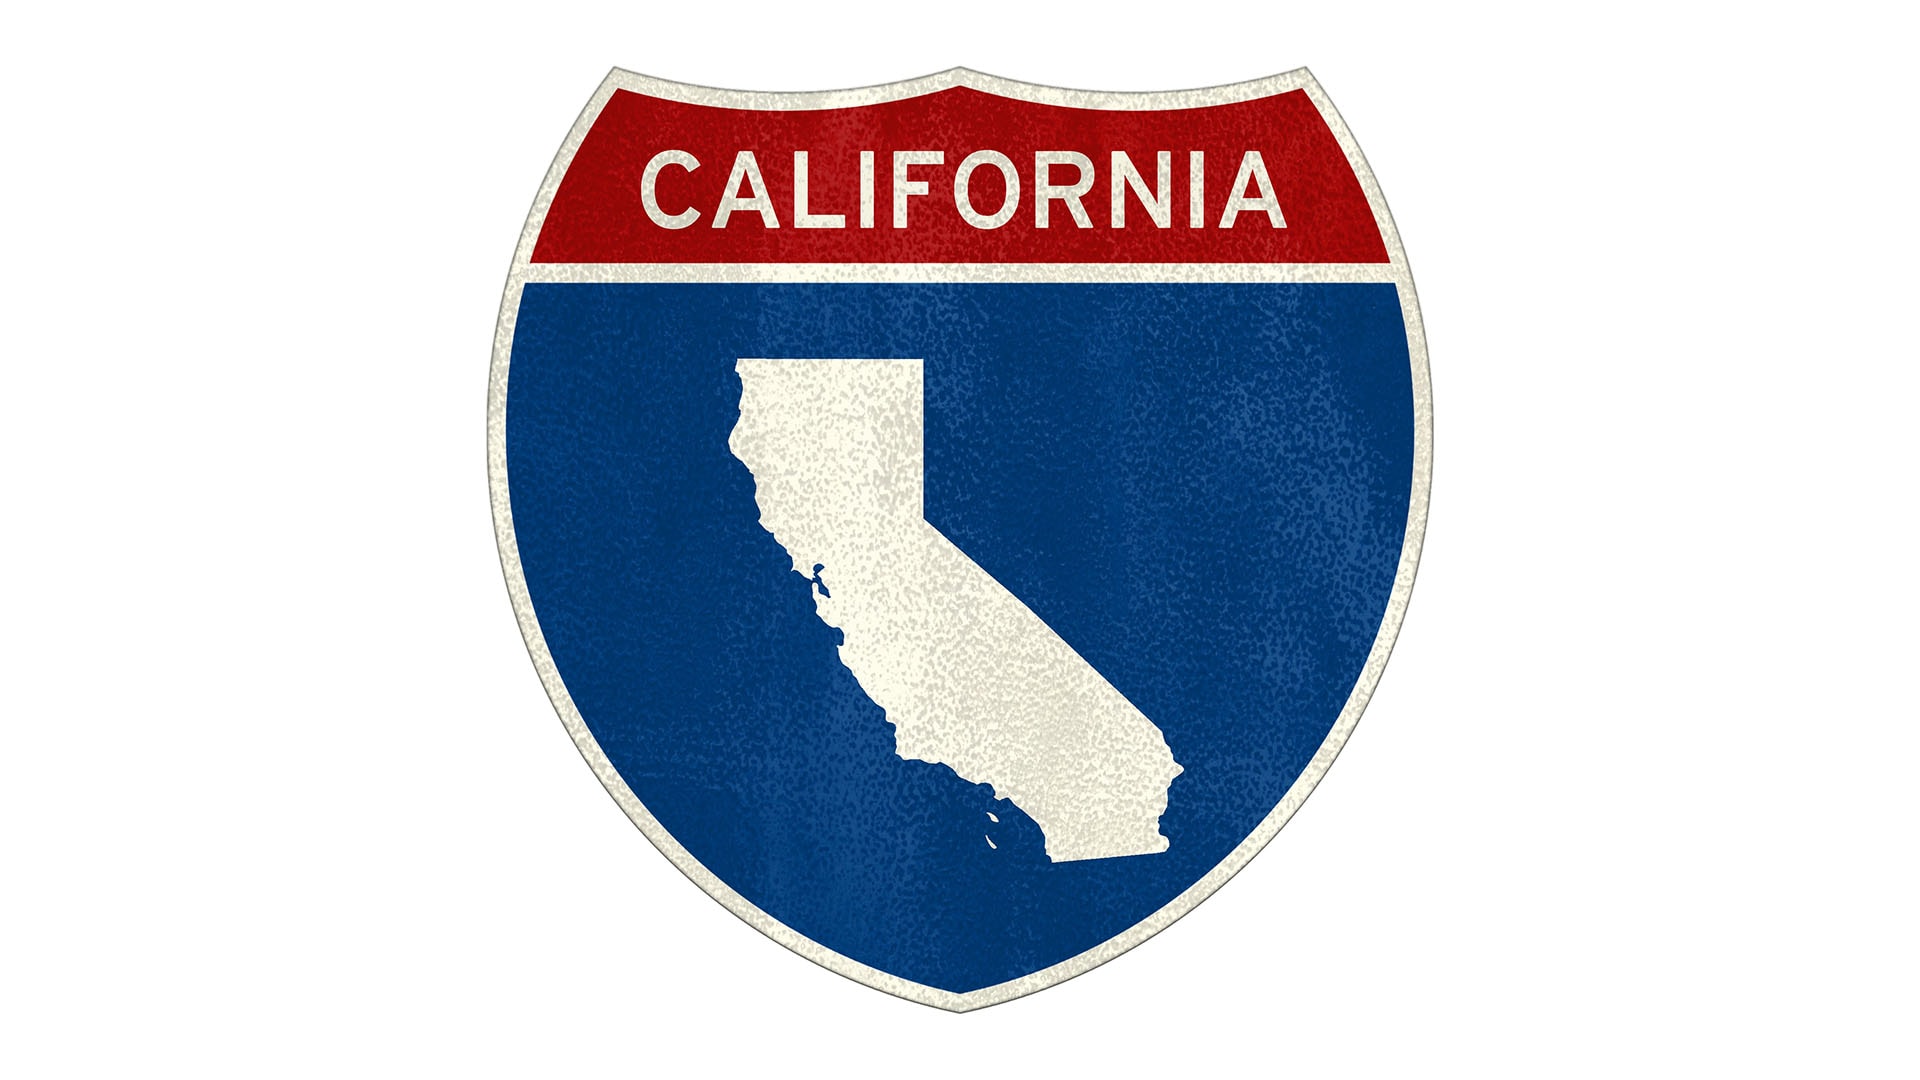 State roadside sign for California